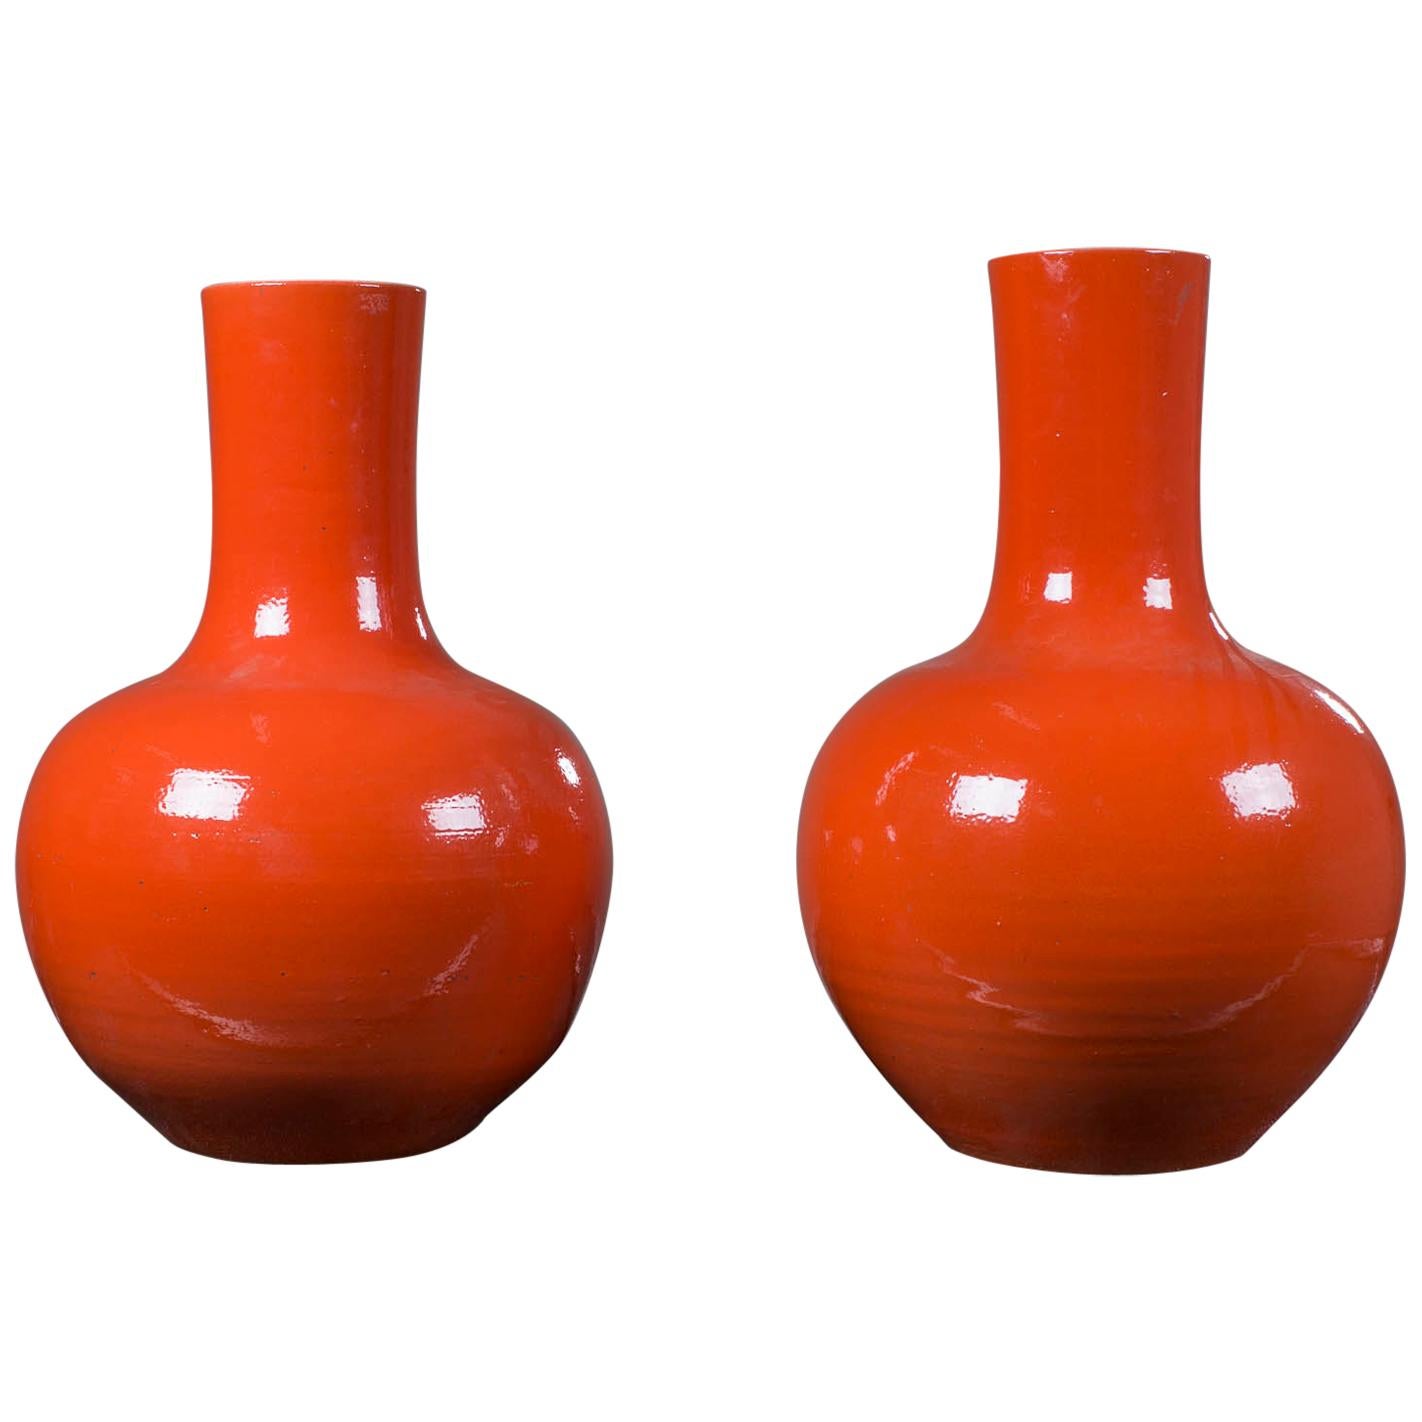 Pair of Modern Chinese Glazed Ceramic Orange Vases from China